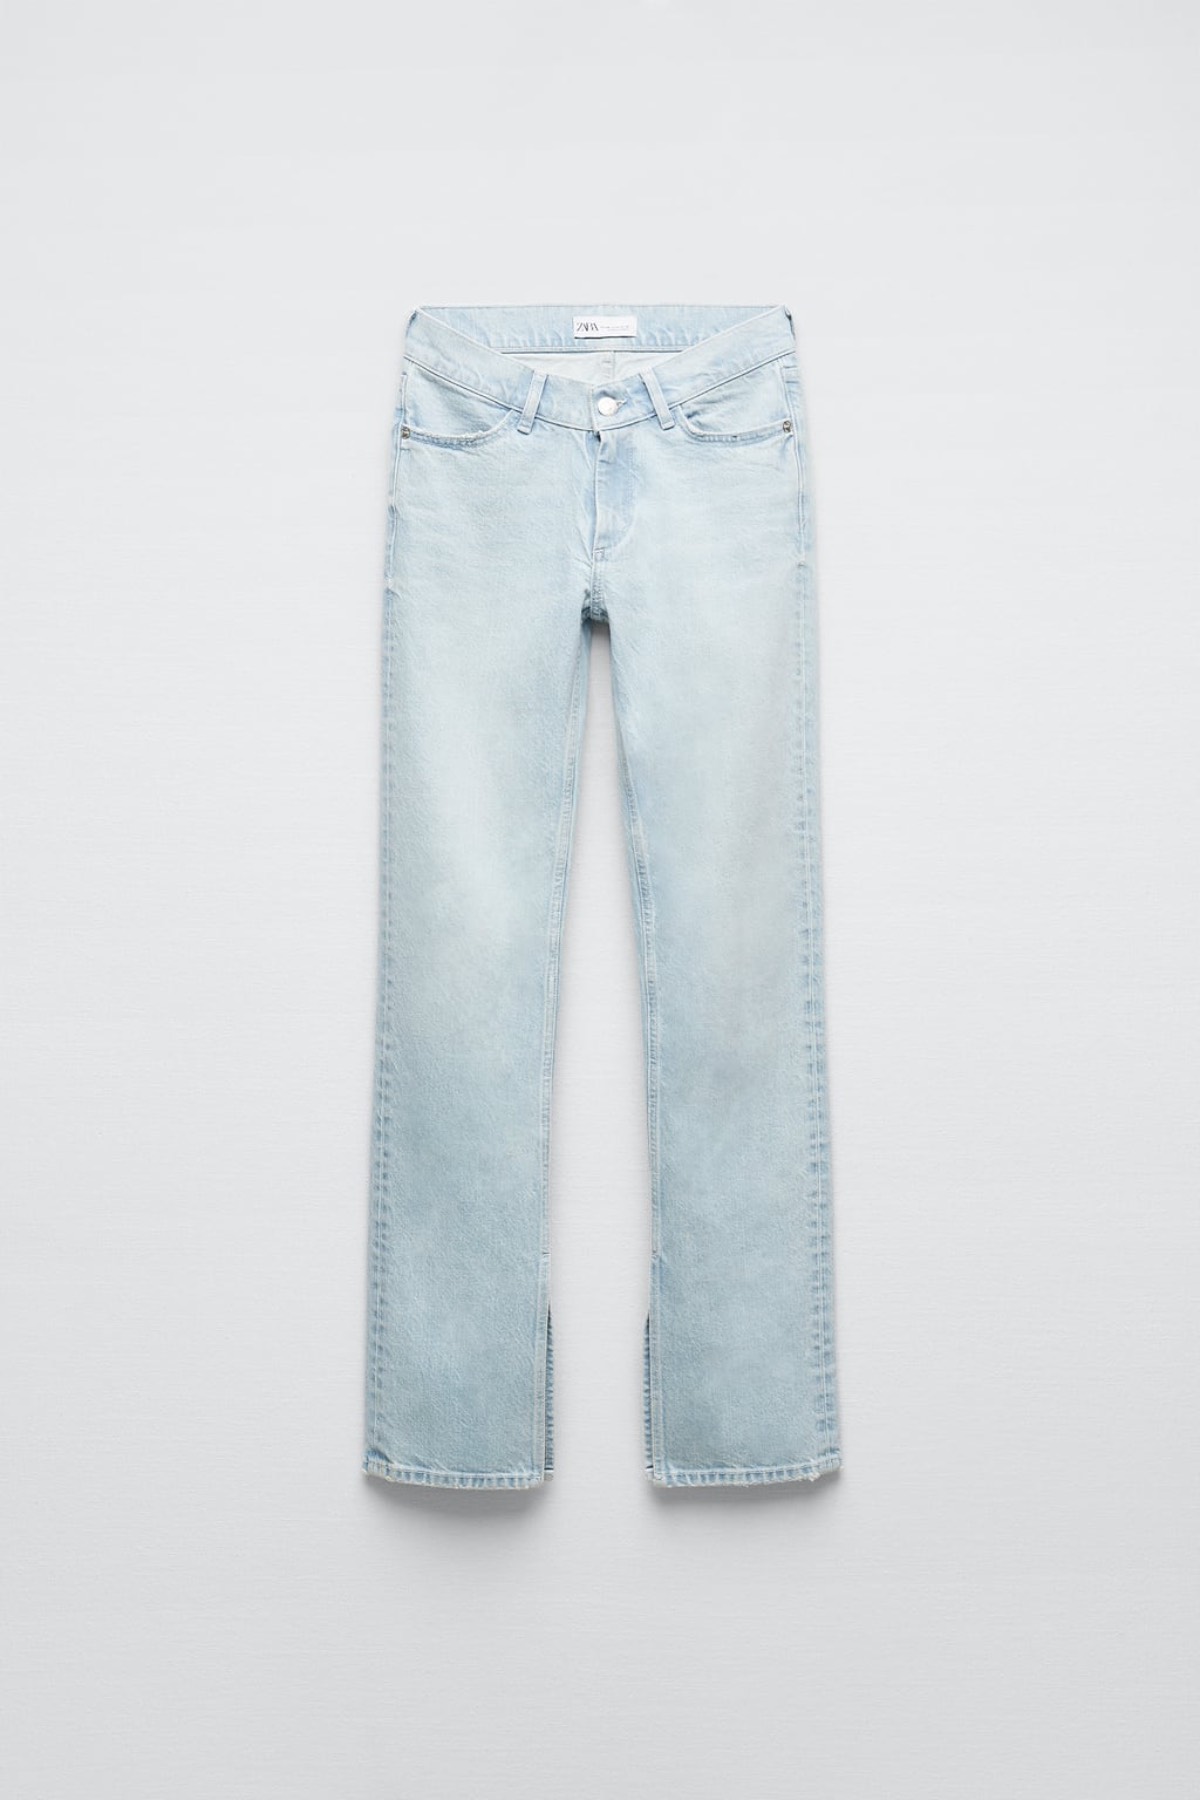 jeans comodo Ana Boyer